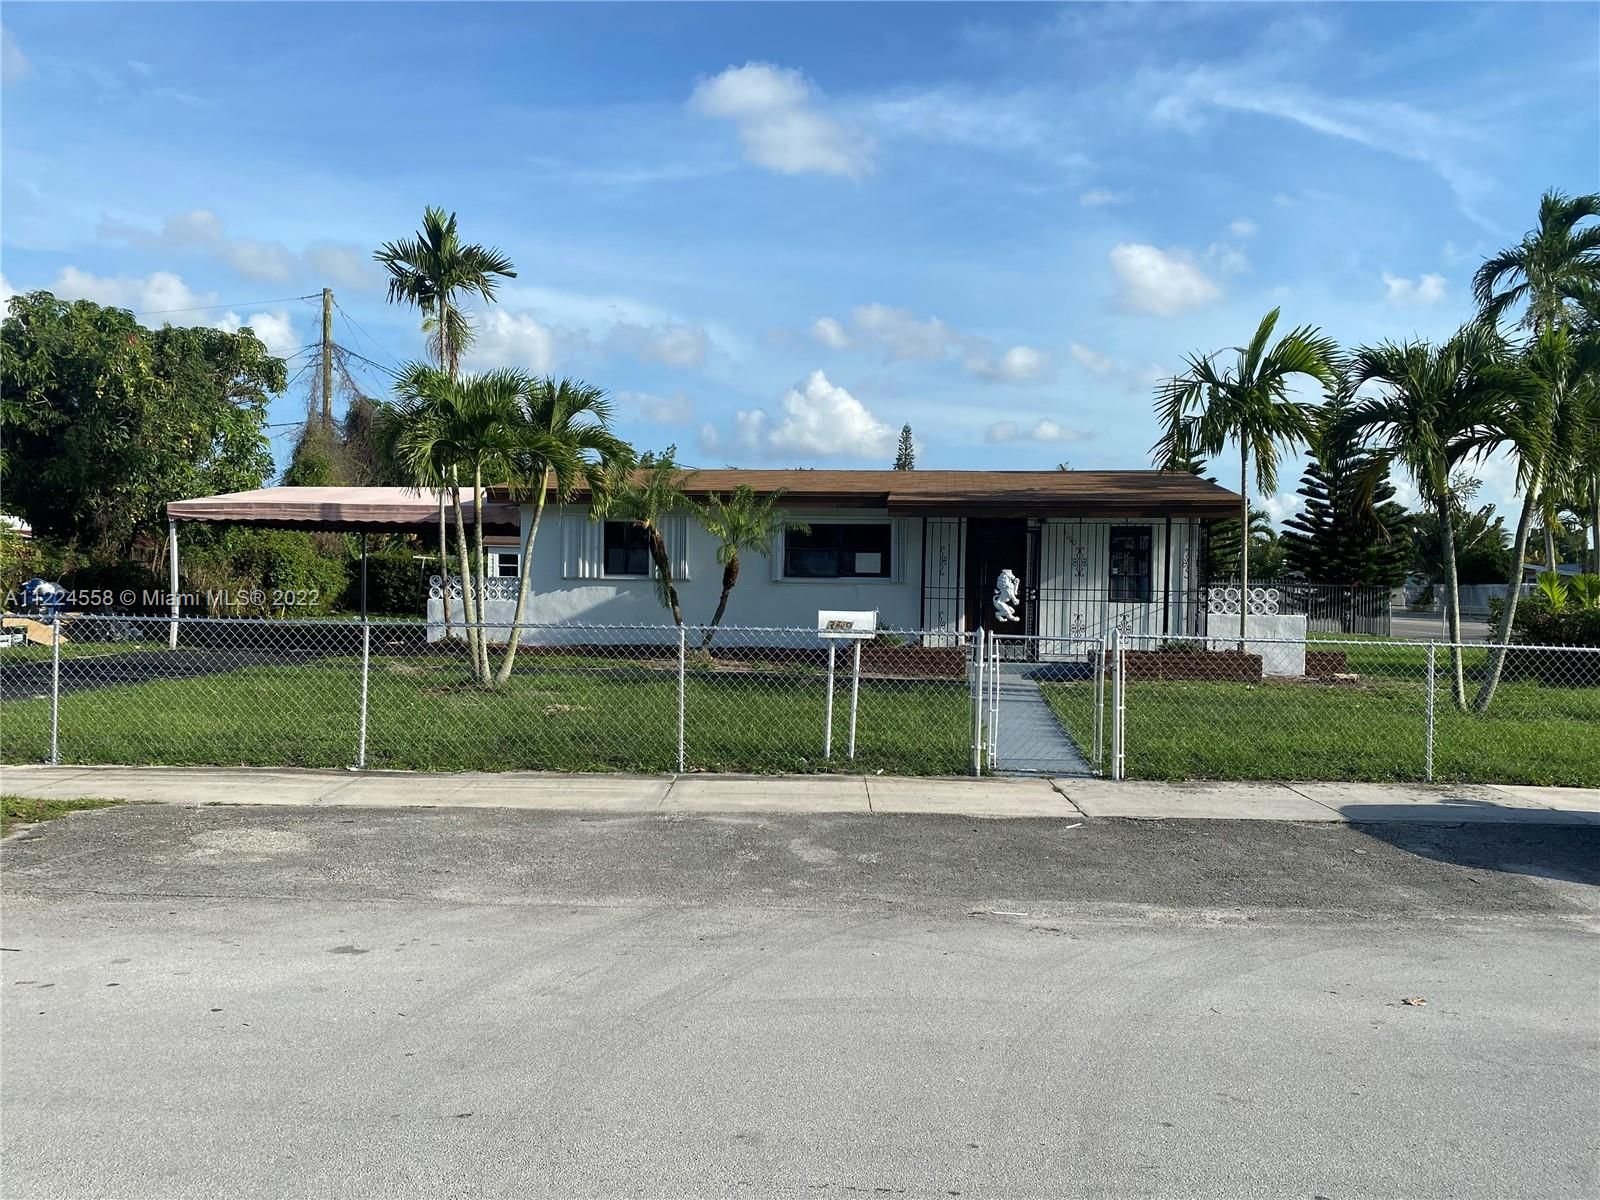 Real estate property located at 3190 86th St, Miami-Dade County, Miami, FL